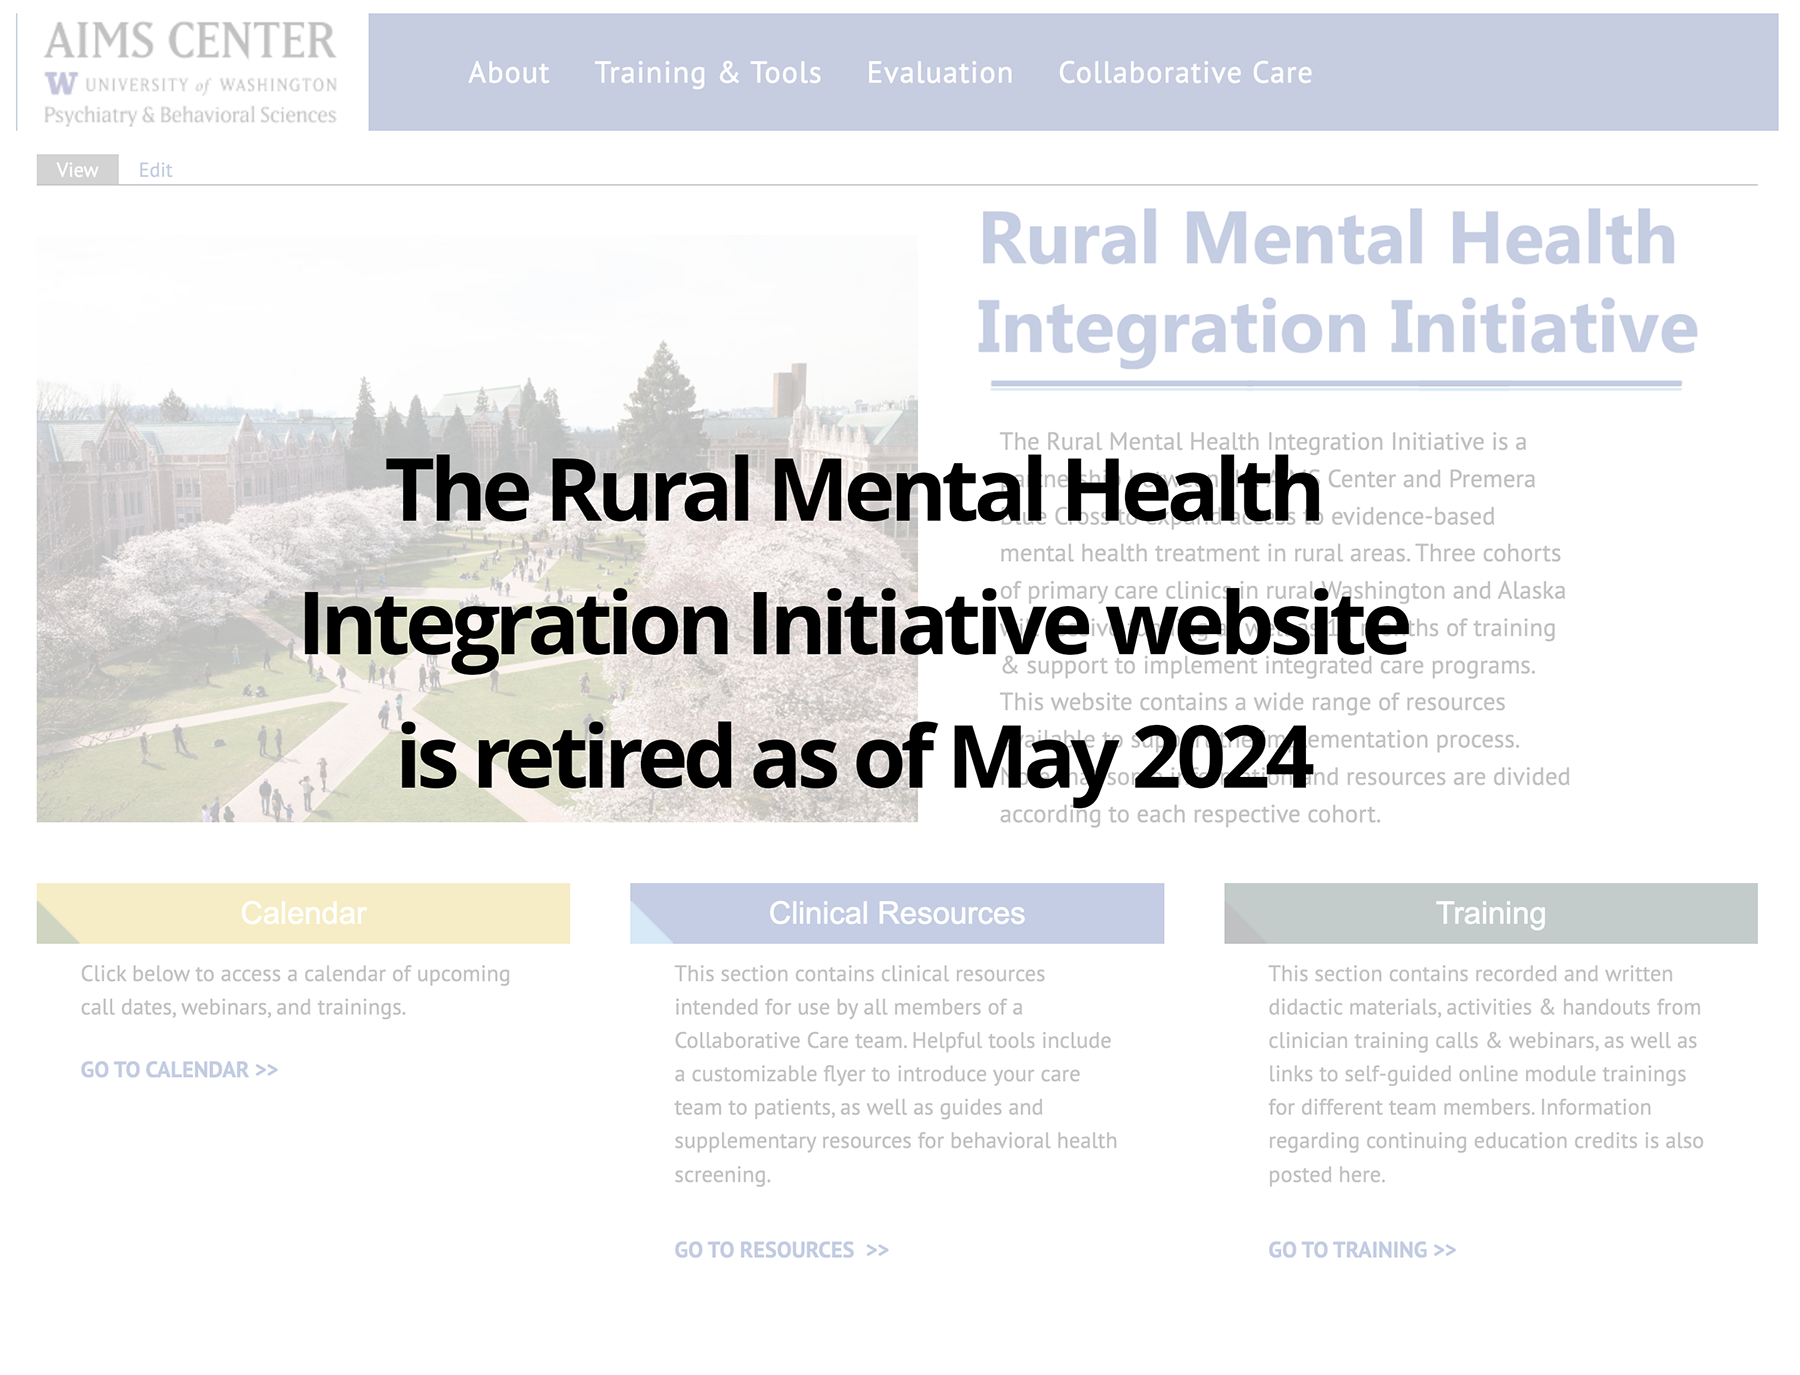 Rural Mental Health Integration Initiative website has been retired